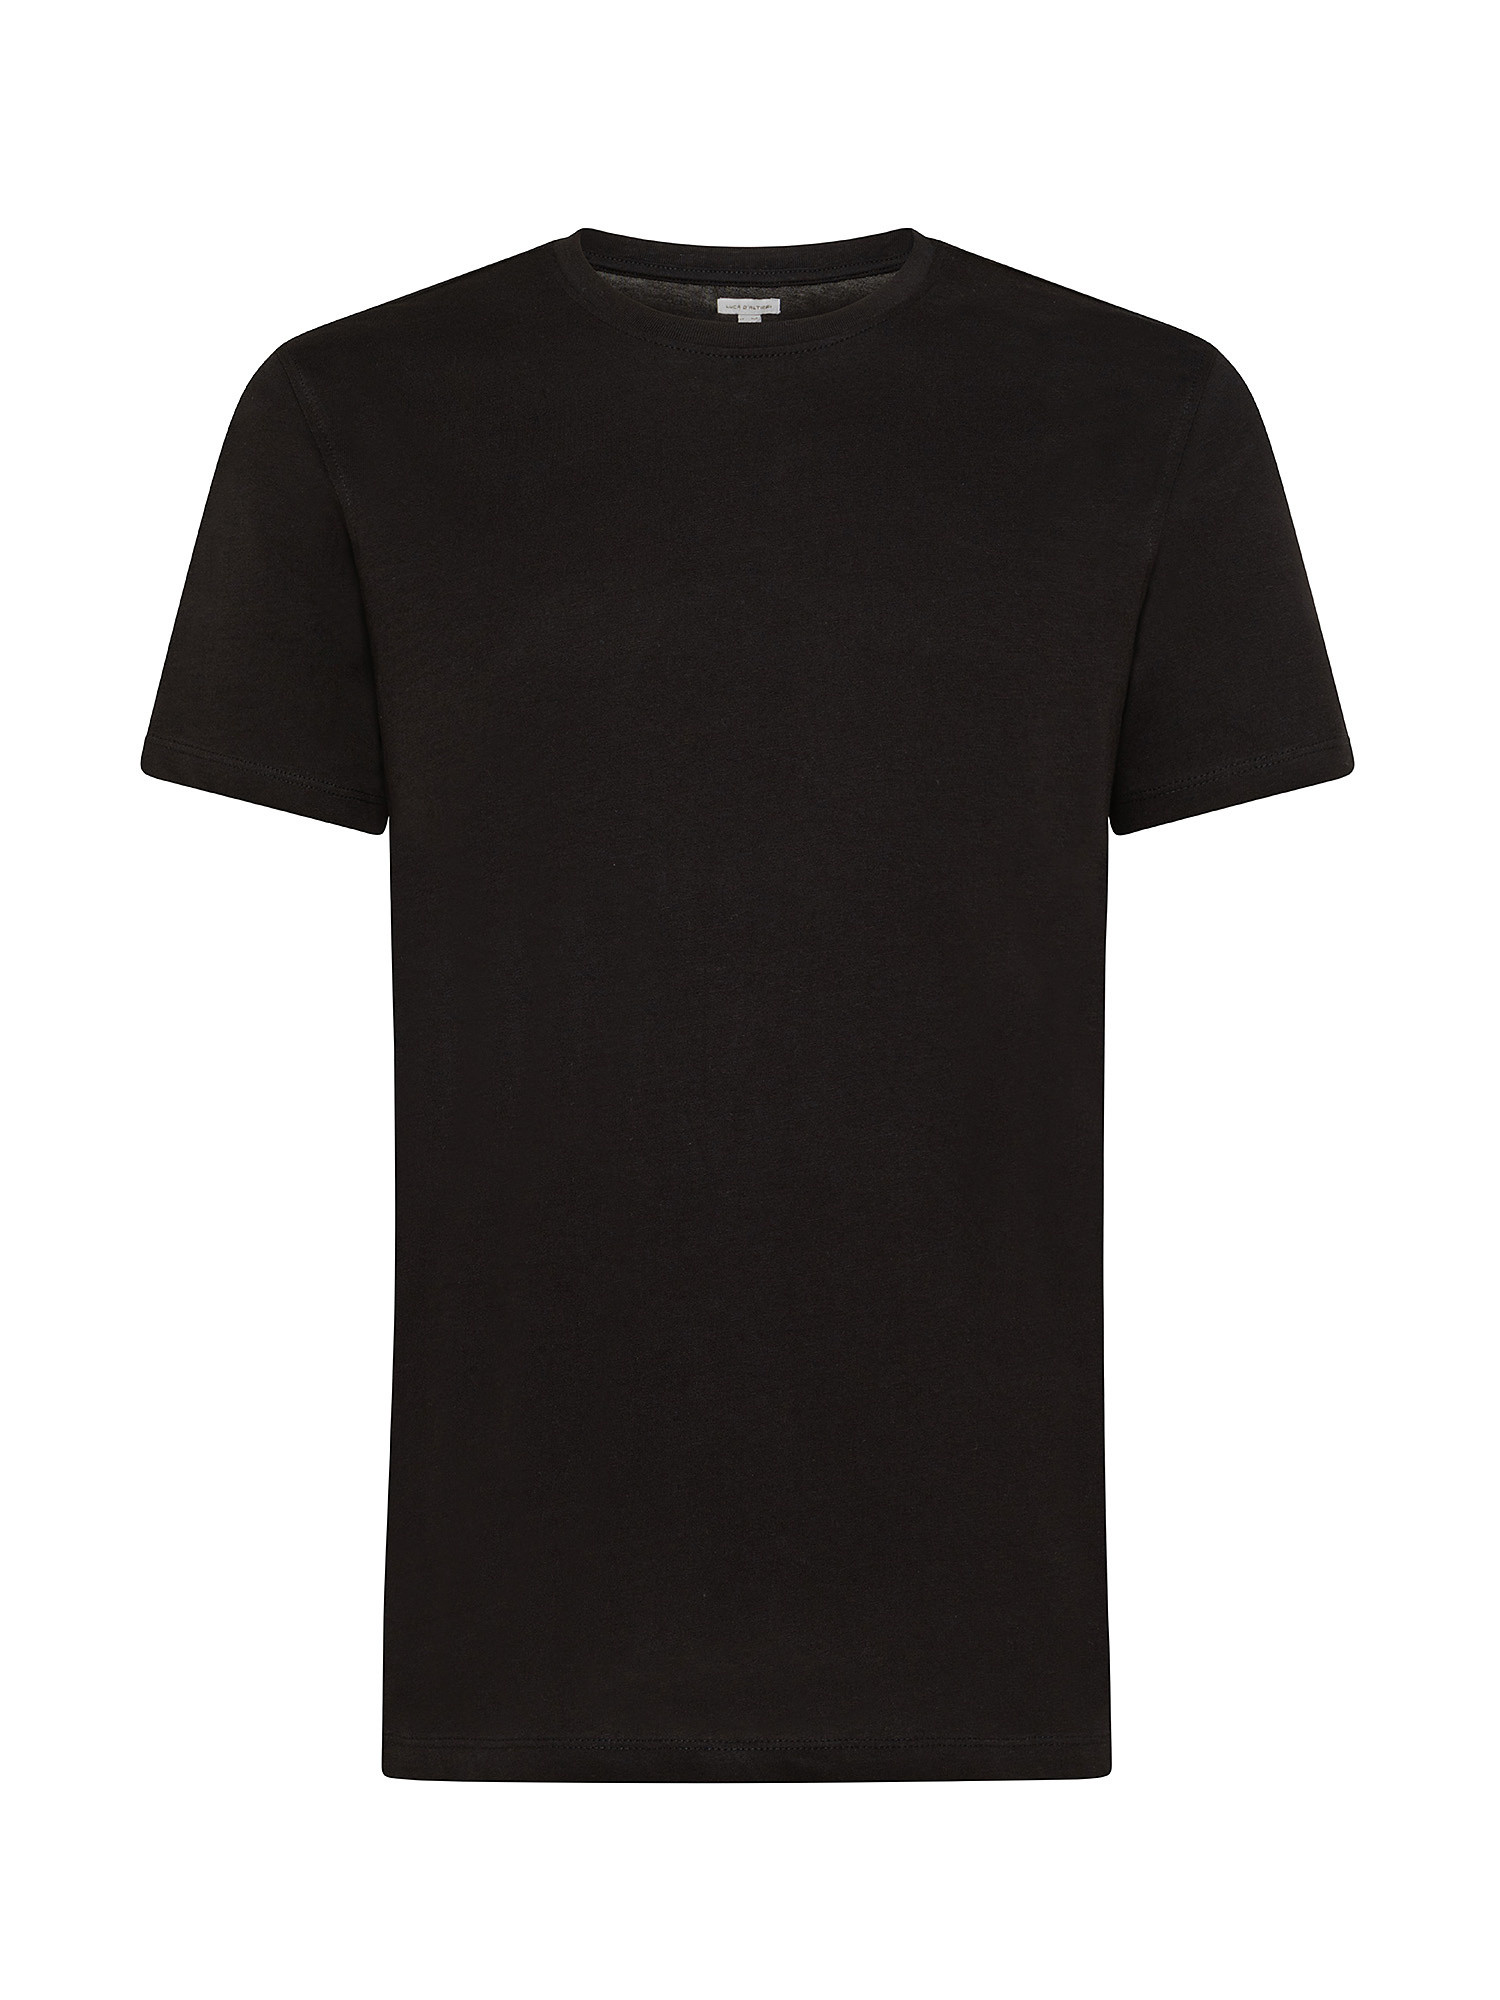 Luca D'Altieri - T-shirt girocollo cotone supima, Nero, large image number 0